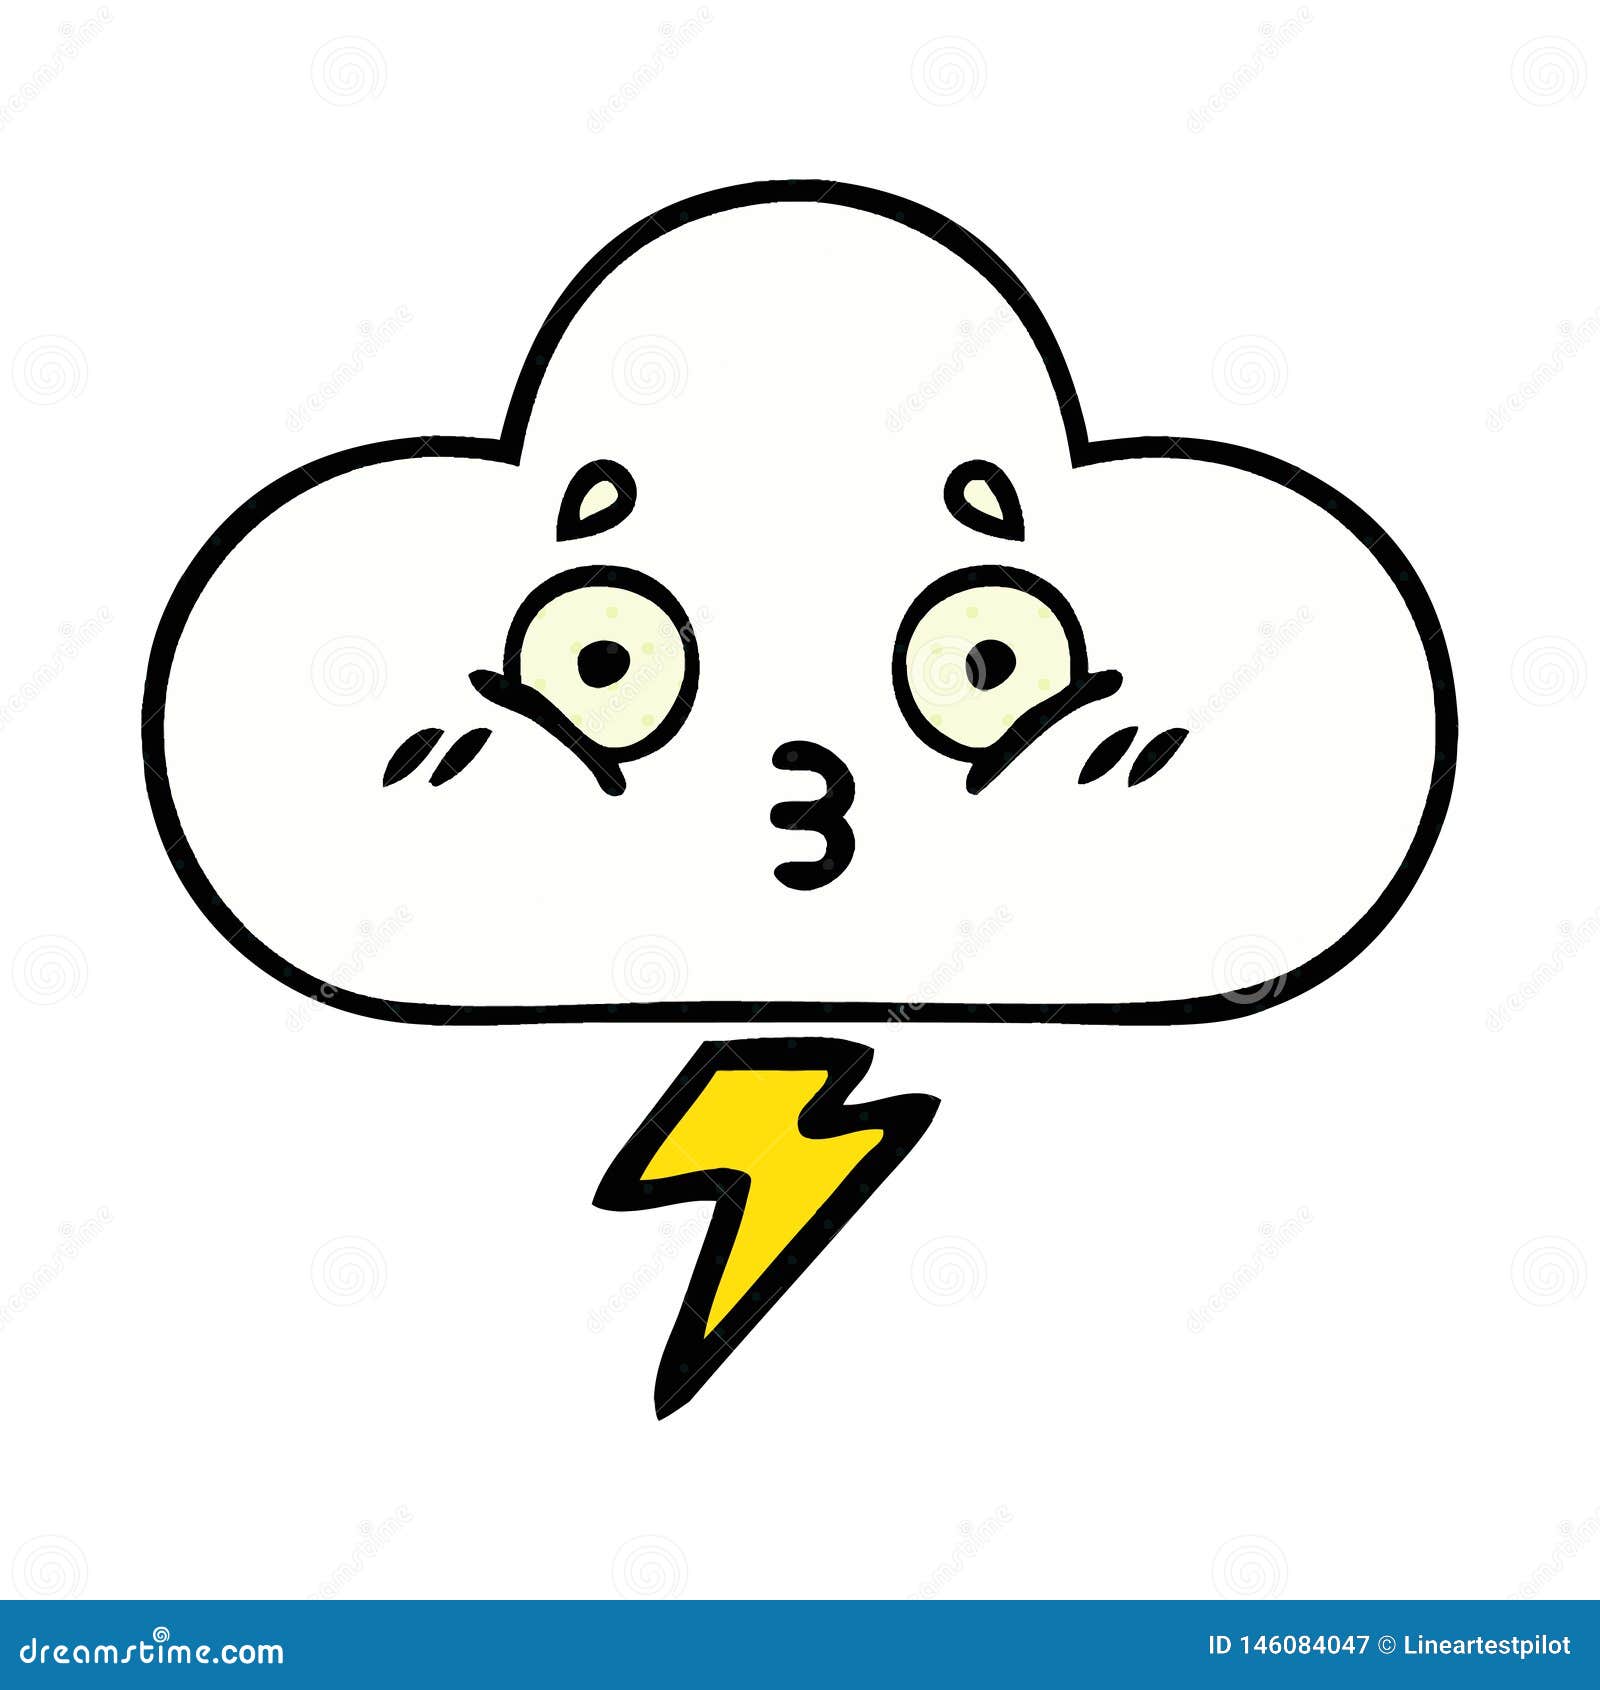 Comic Book Style Cartoon of a Thunder Cloud Stock Vector - Illustration ...